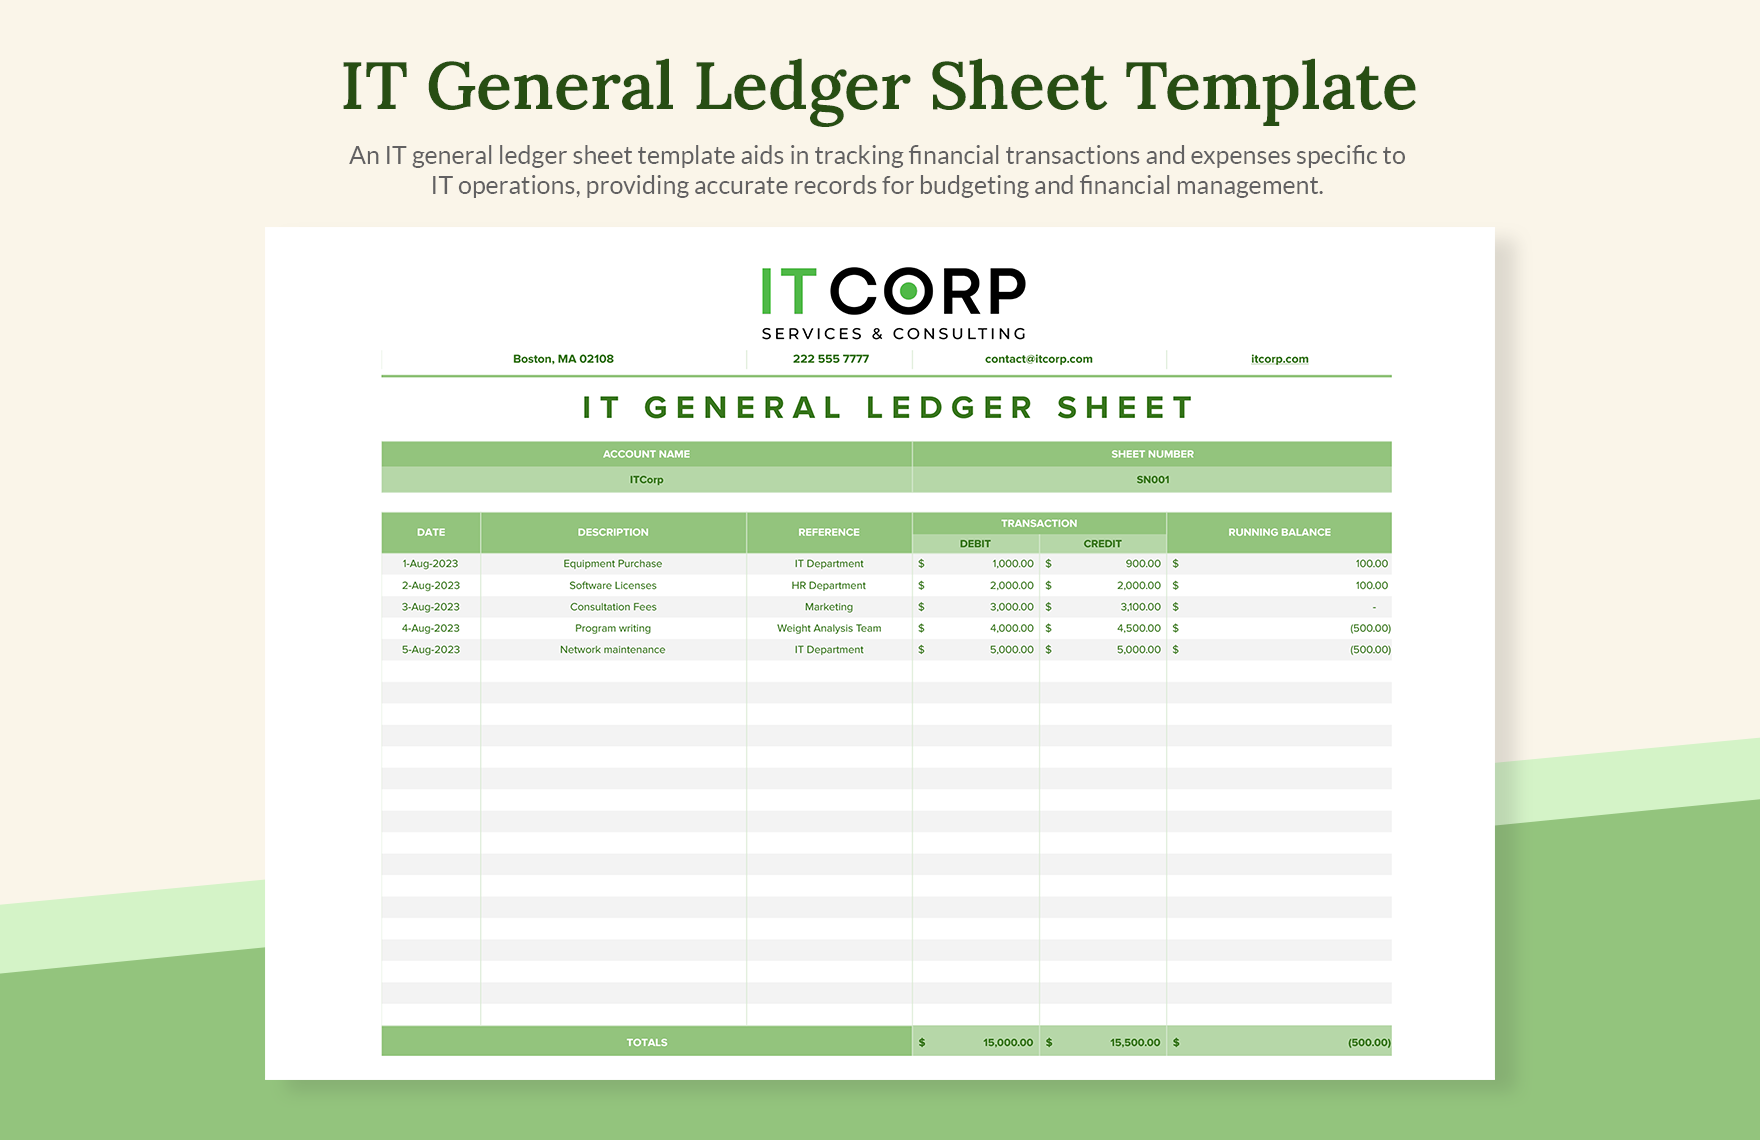 IT General Ledger Sheet Template